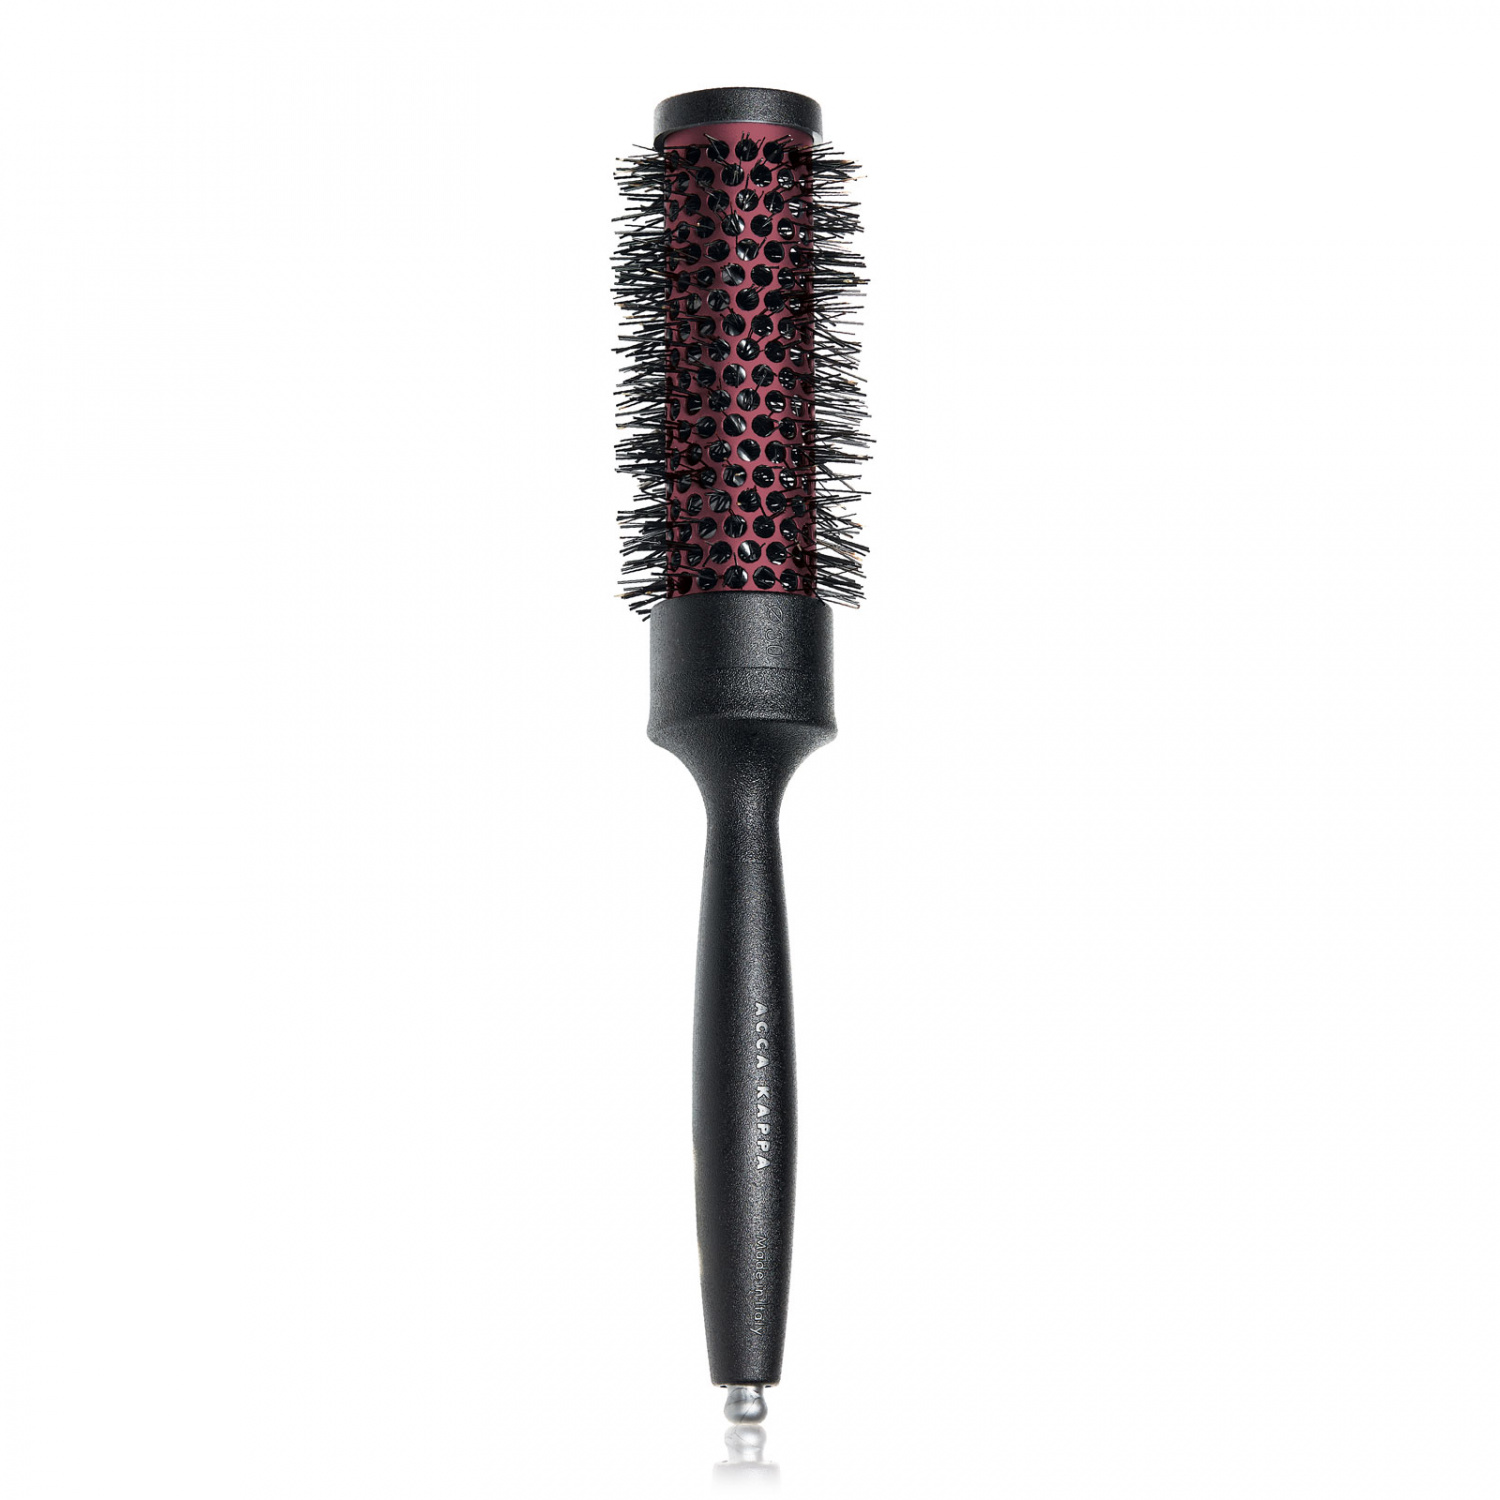 Acca Kappa Hairbrush 30mm - интернет-магазин профессиональной косметики Spadream, изображение 43858